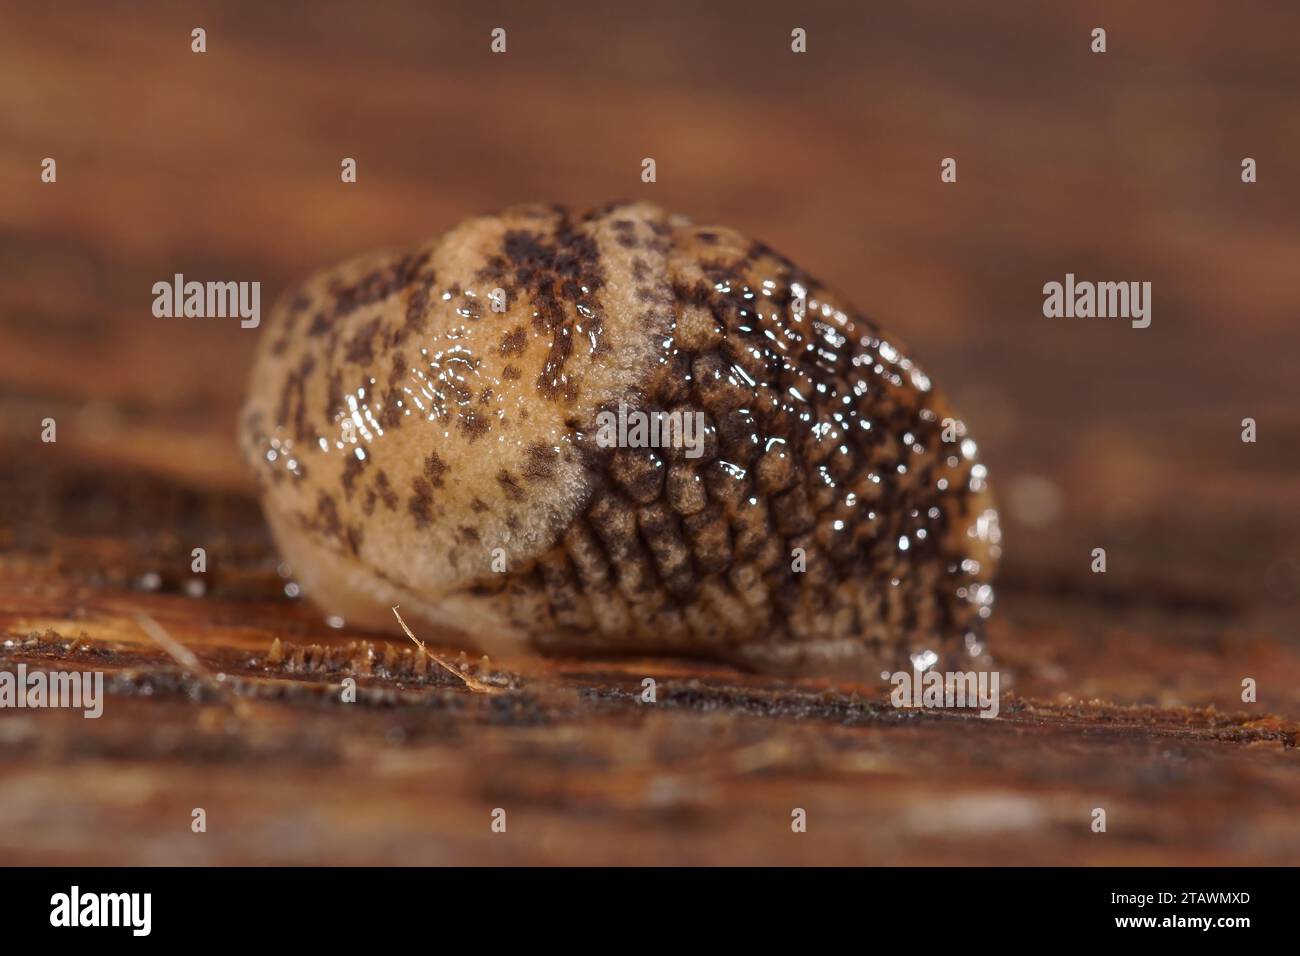 Detailed closeup on a young grey field or garden slug, Deroceras reticulatum on wooden surface Stock Photo